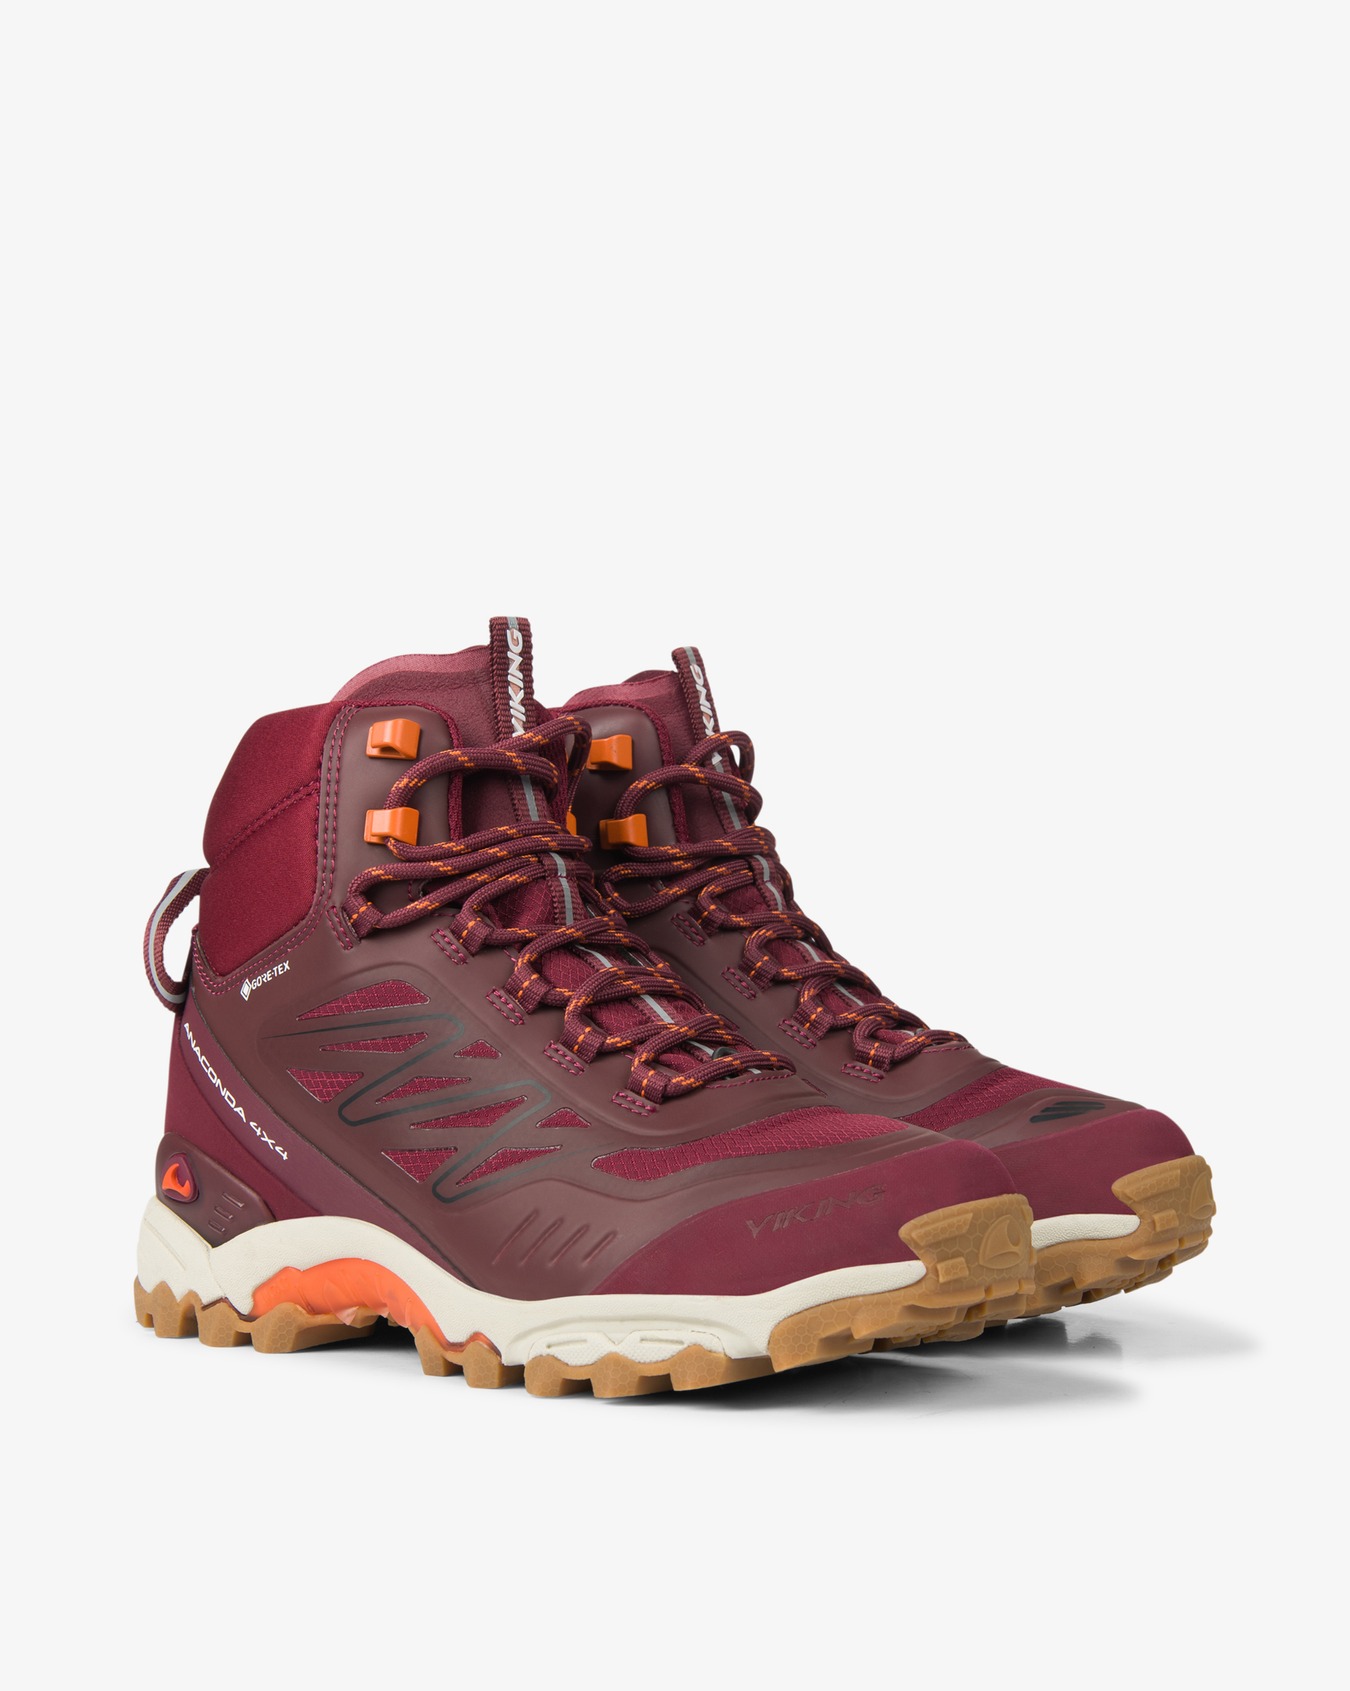 Anaconda 4x4 Mid GTX Red Hiking Boots